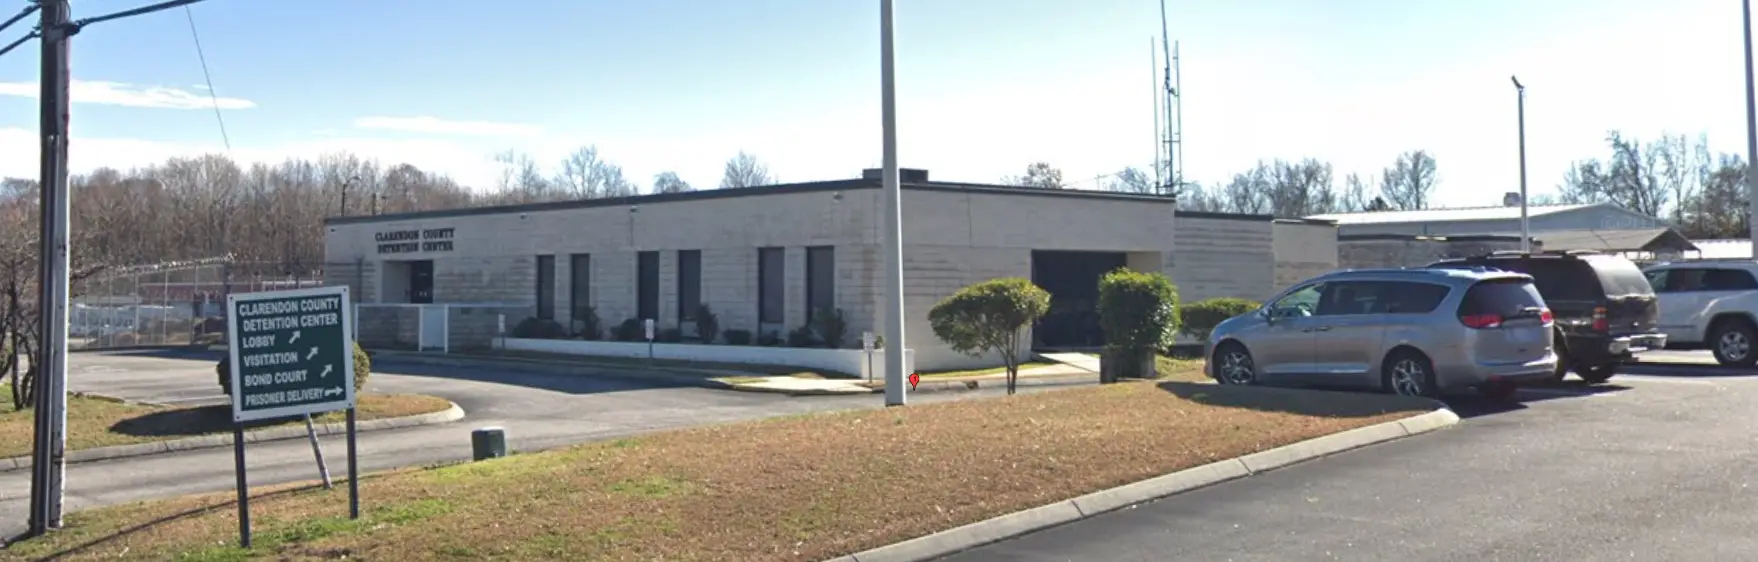 Clarendon County Detention Center